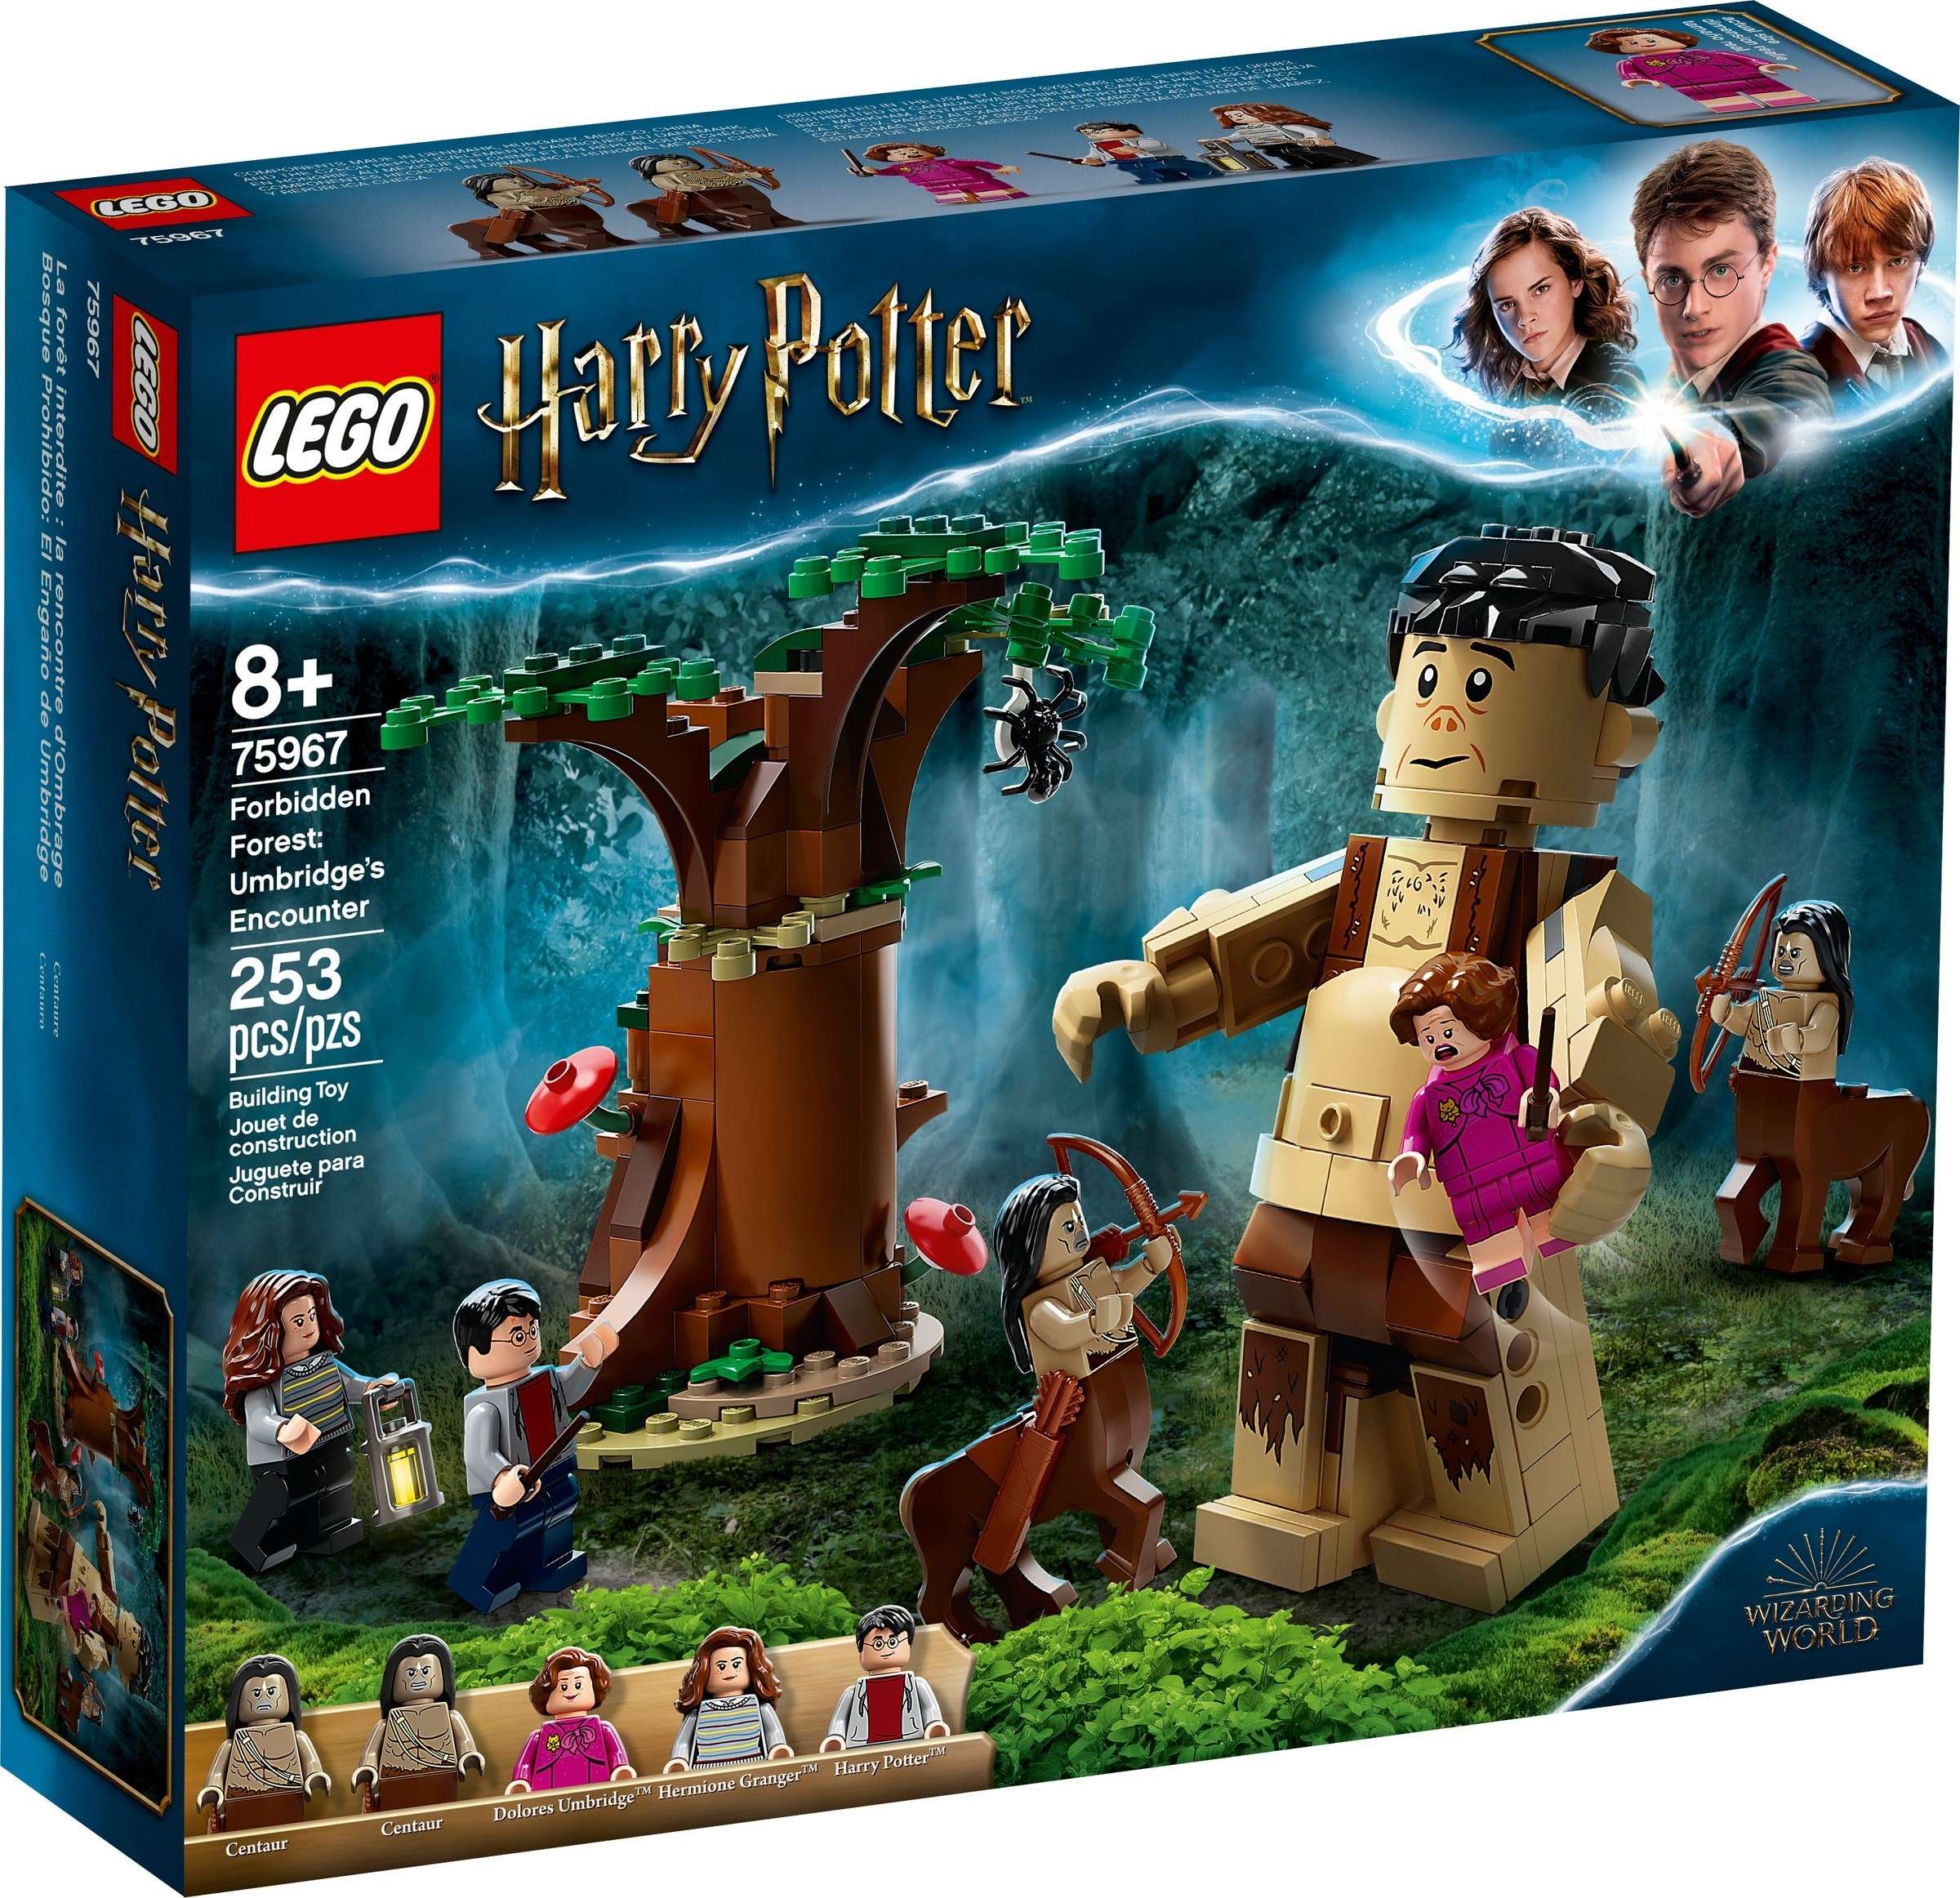 LEGO Harry Potter - Forbidden Forest: Umbridge